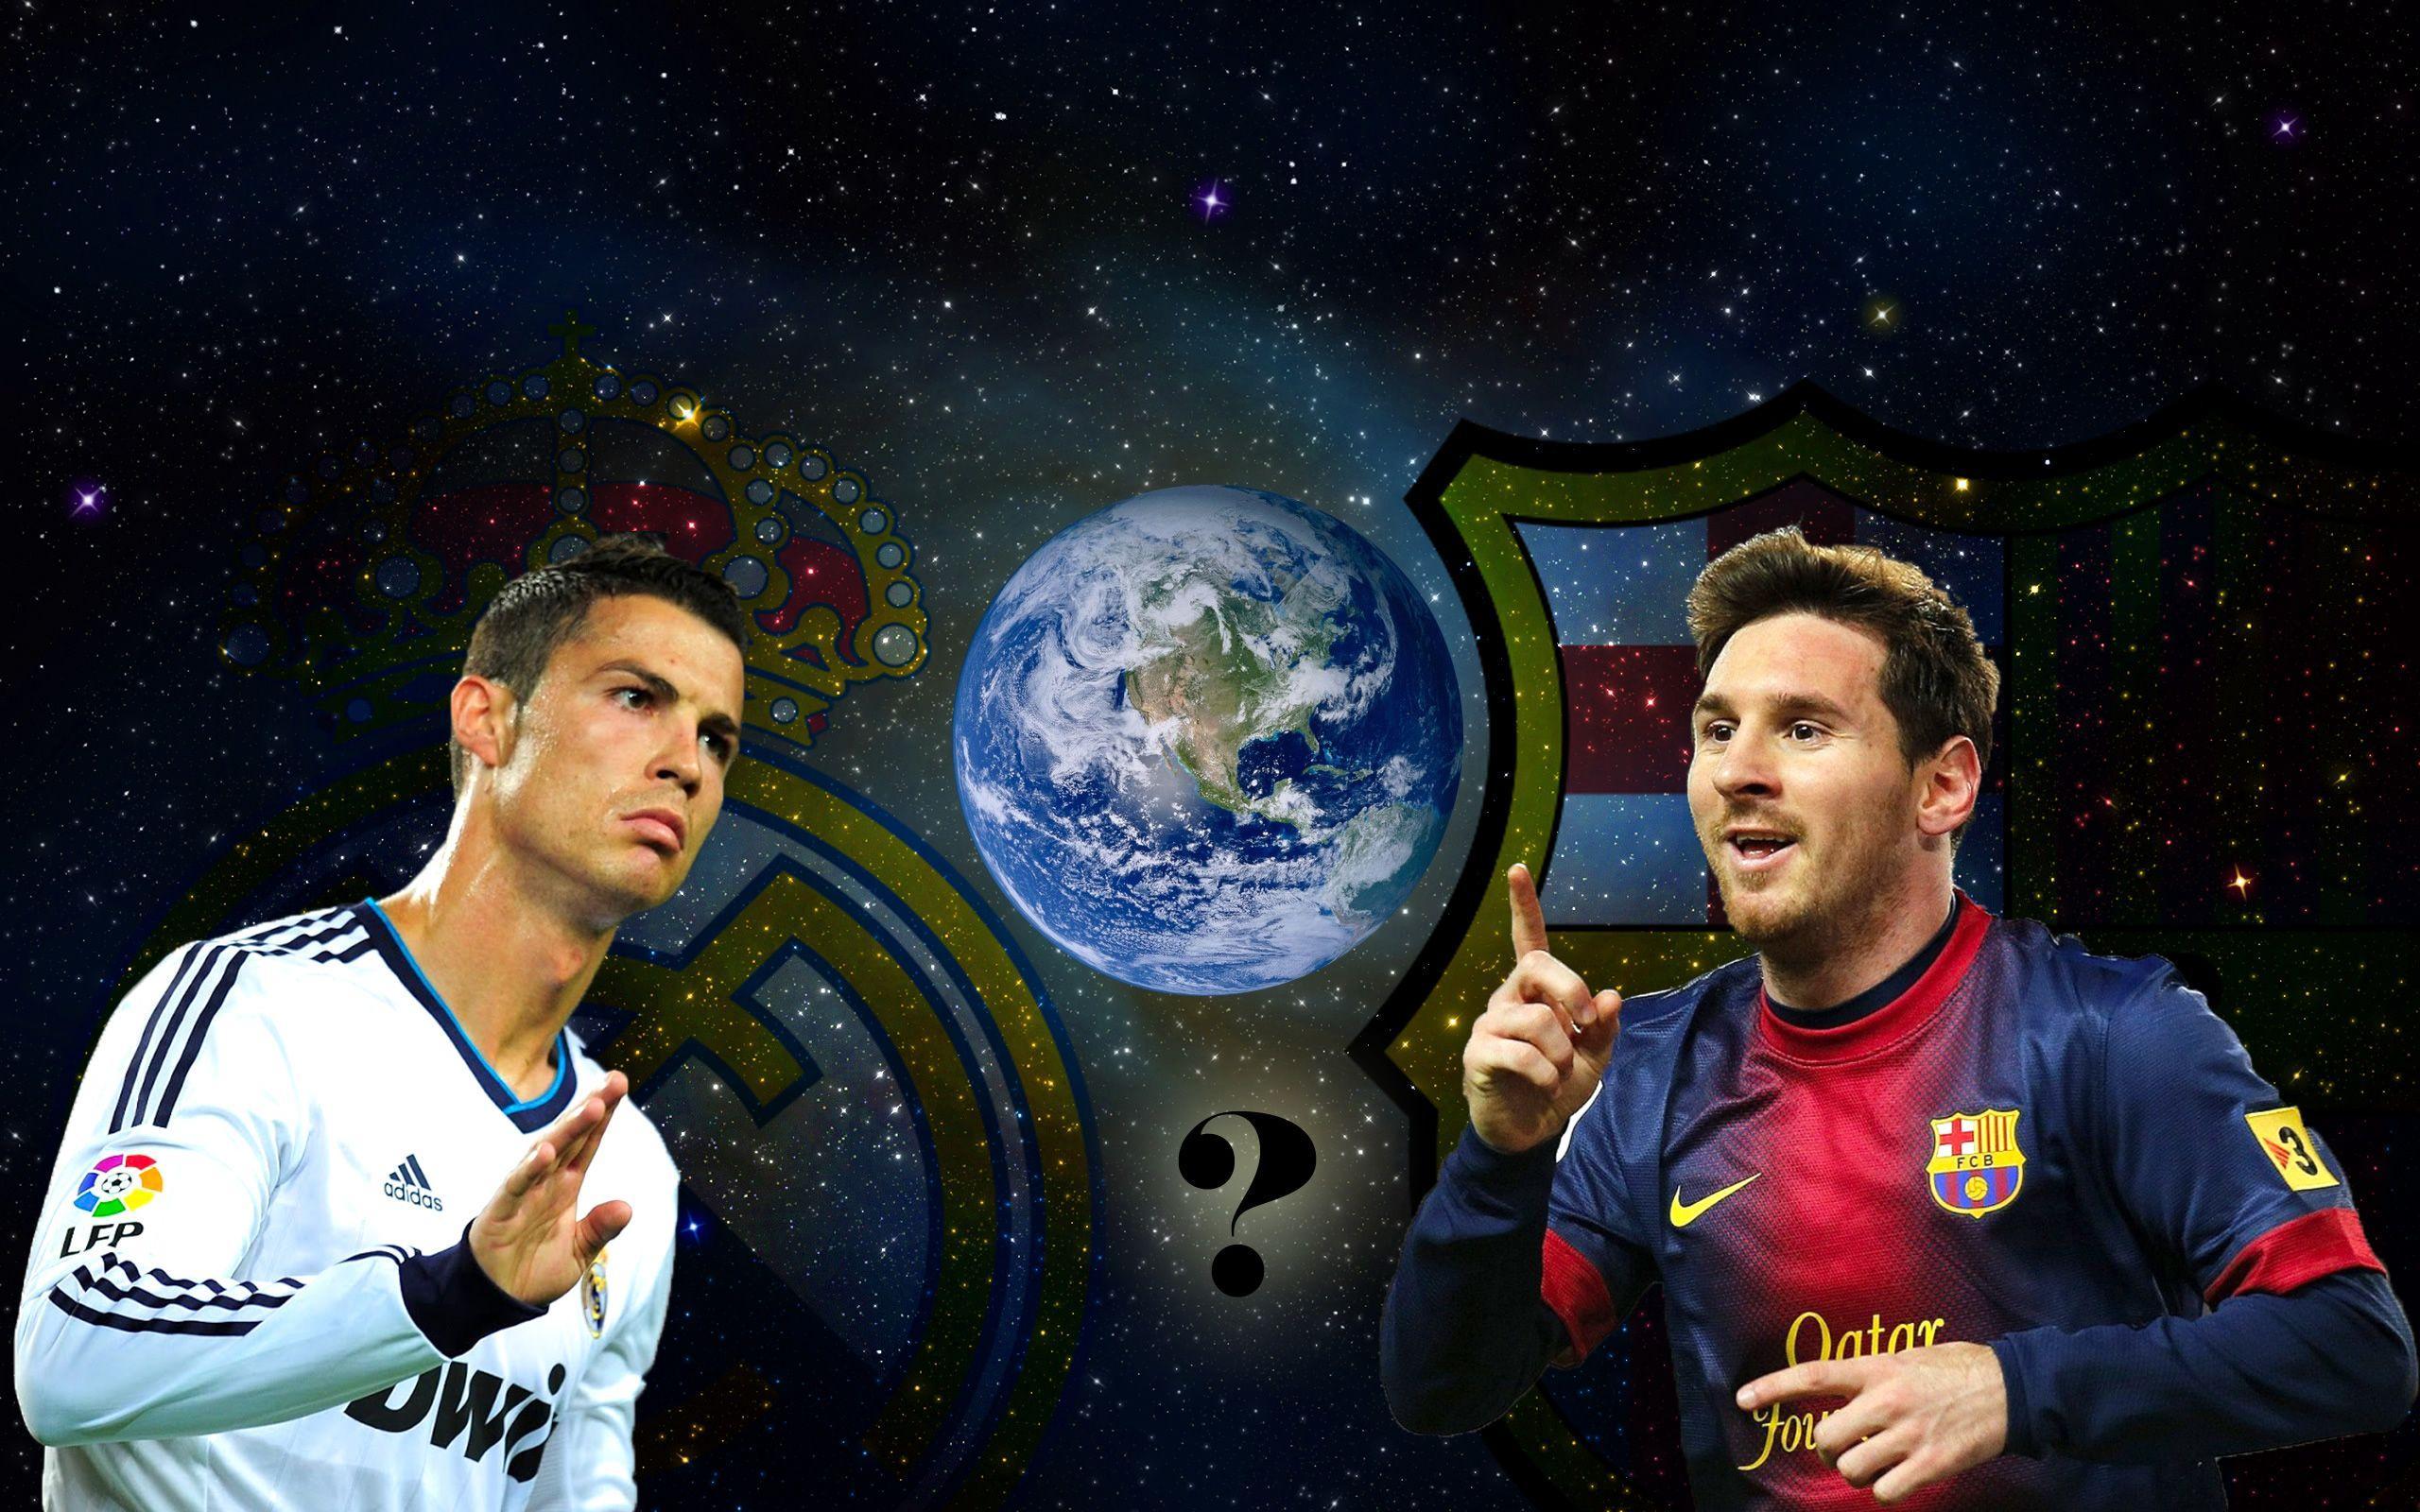 Messi Ronaldo Wallpaper